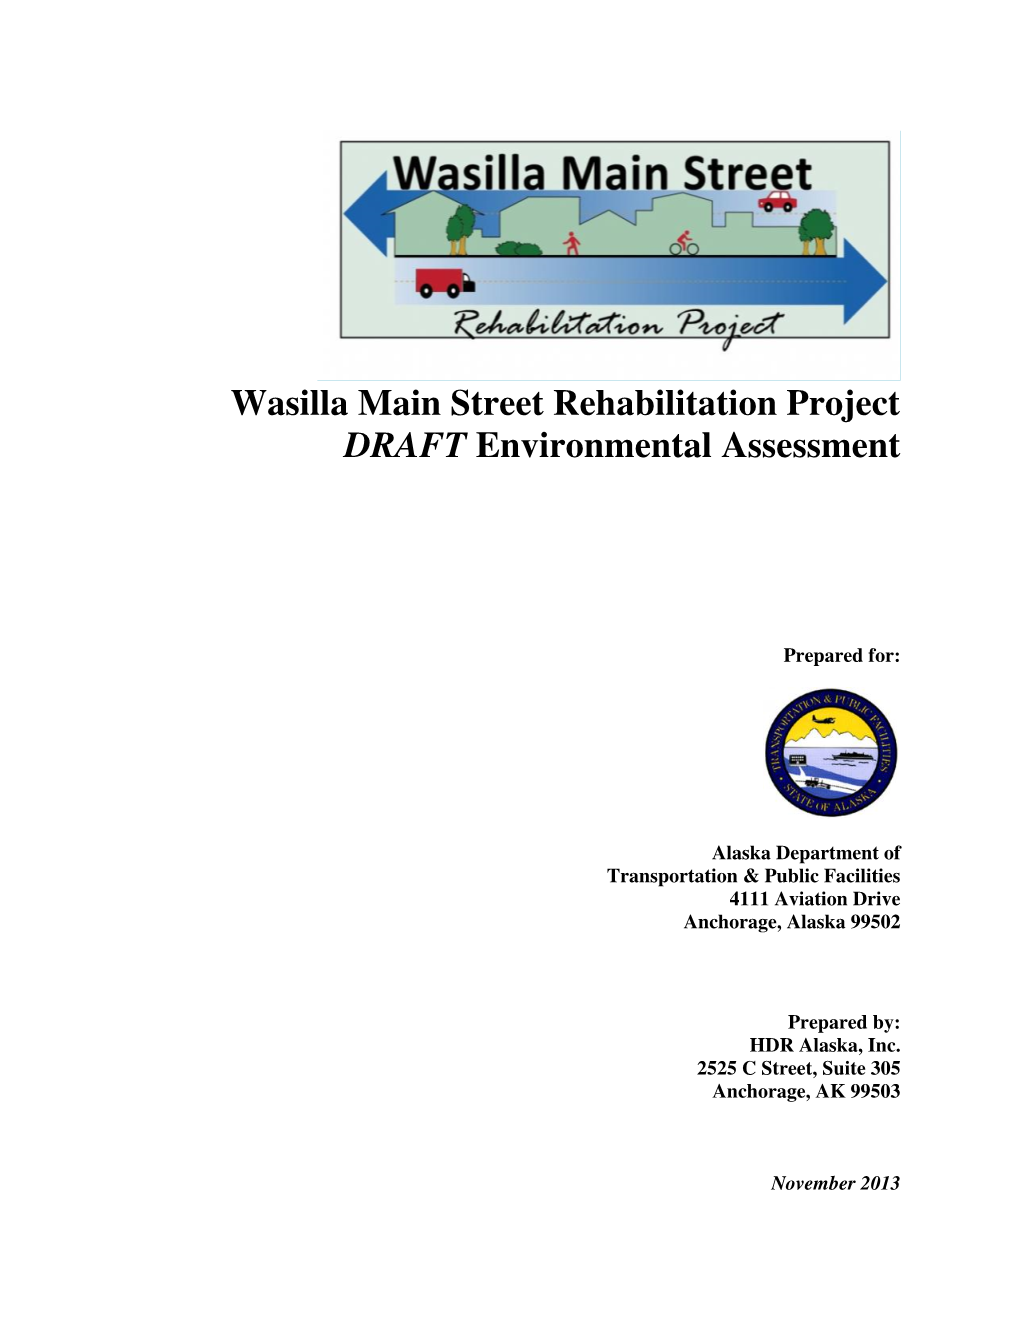 Wasilla Main Street Rehabilitation Project DRAFT Environmental Assessment